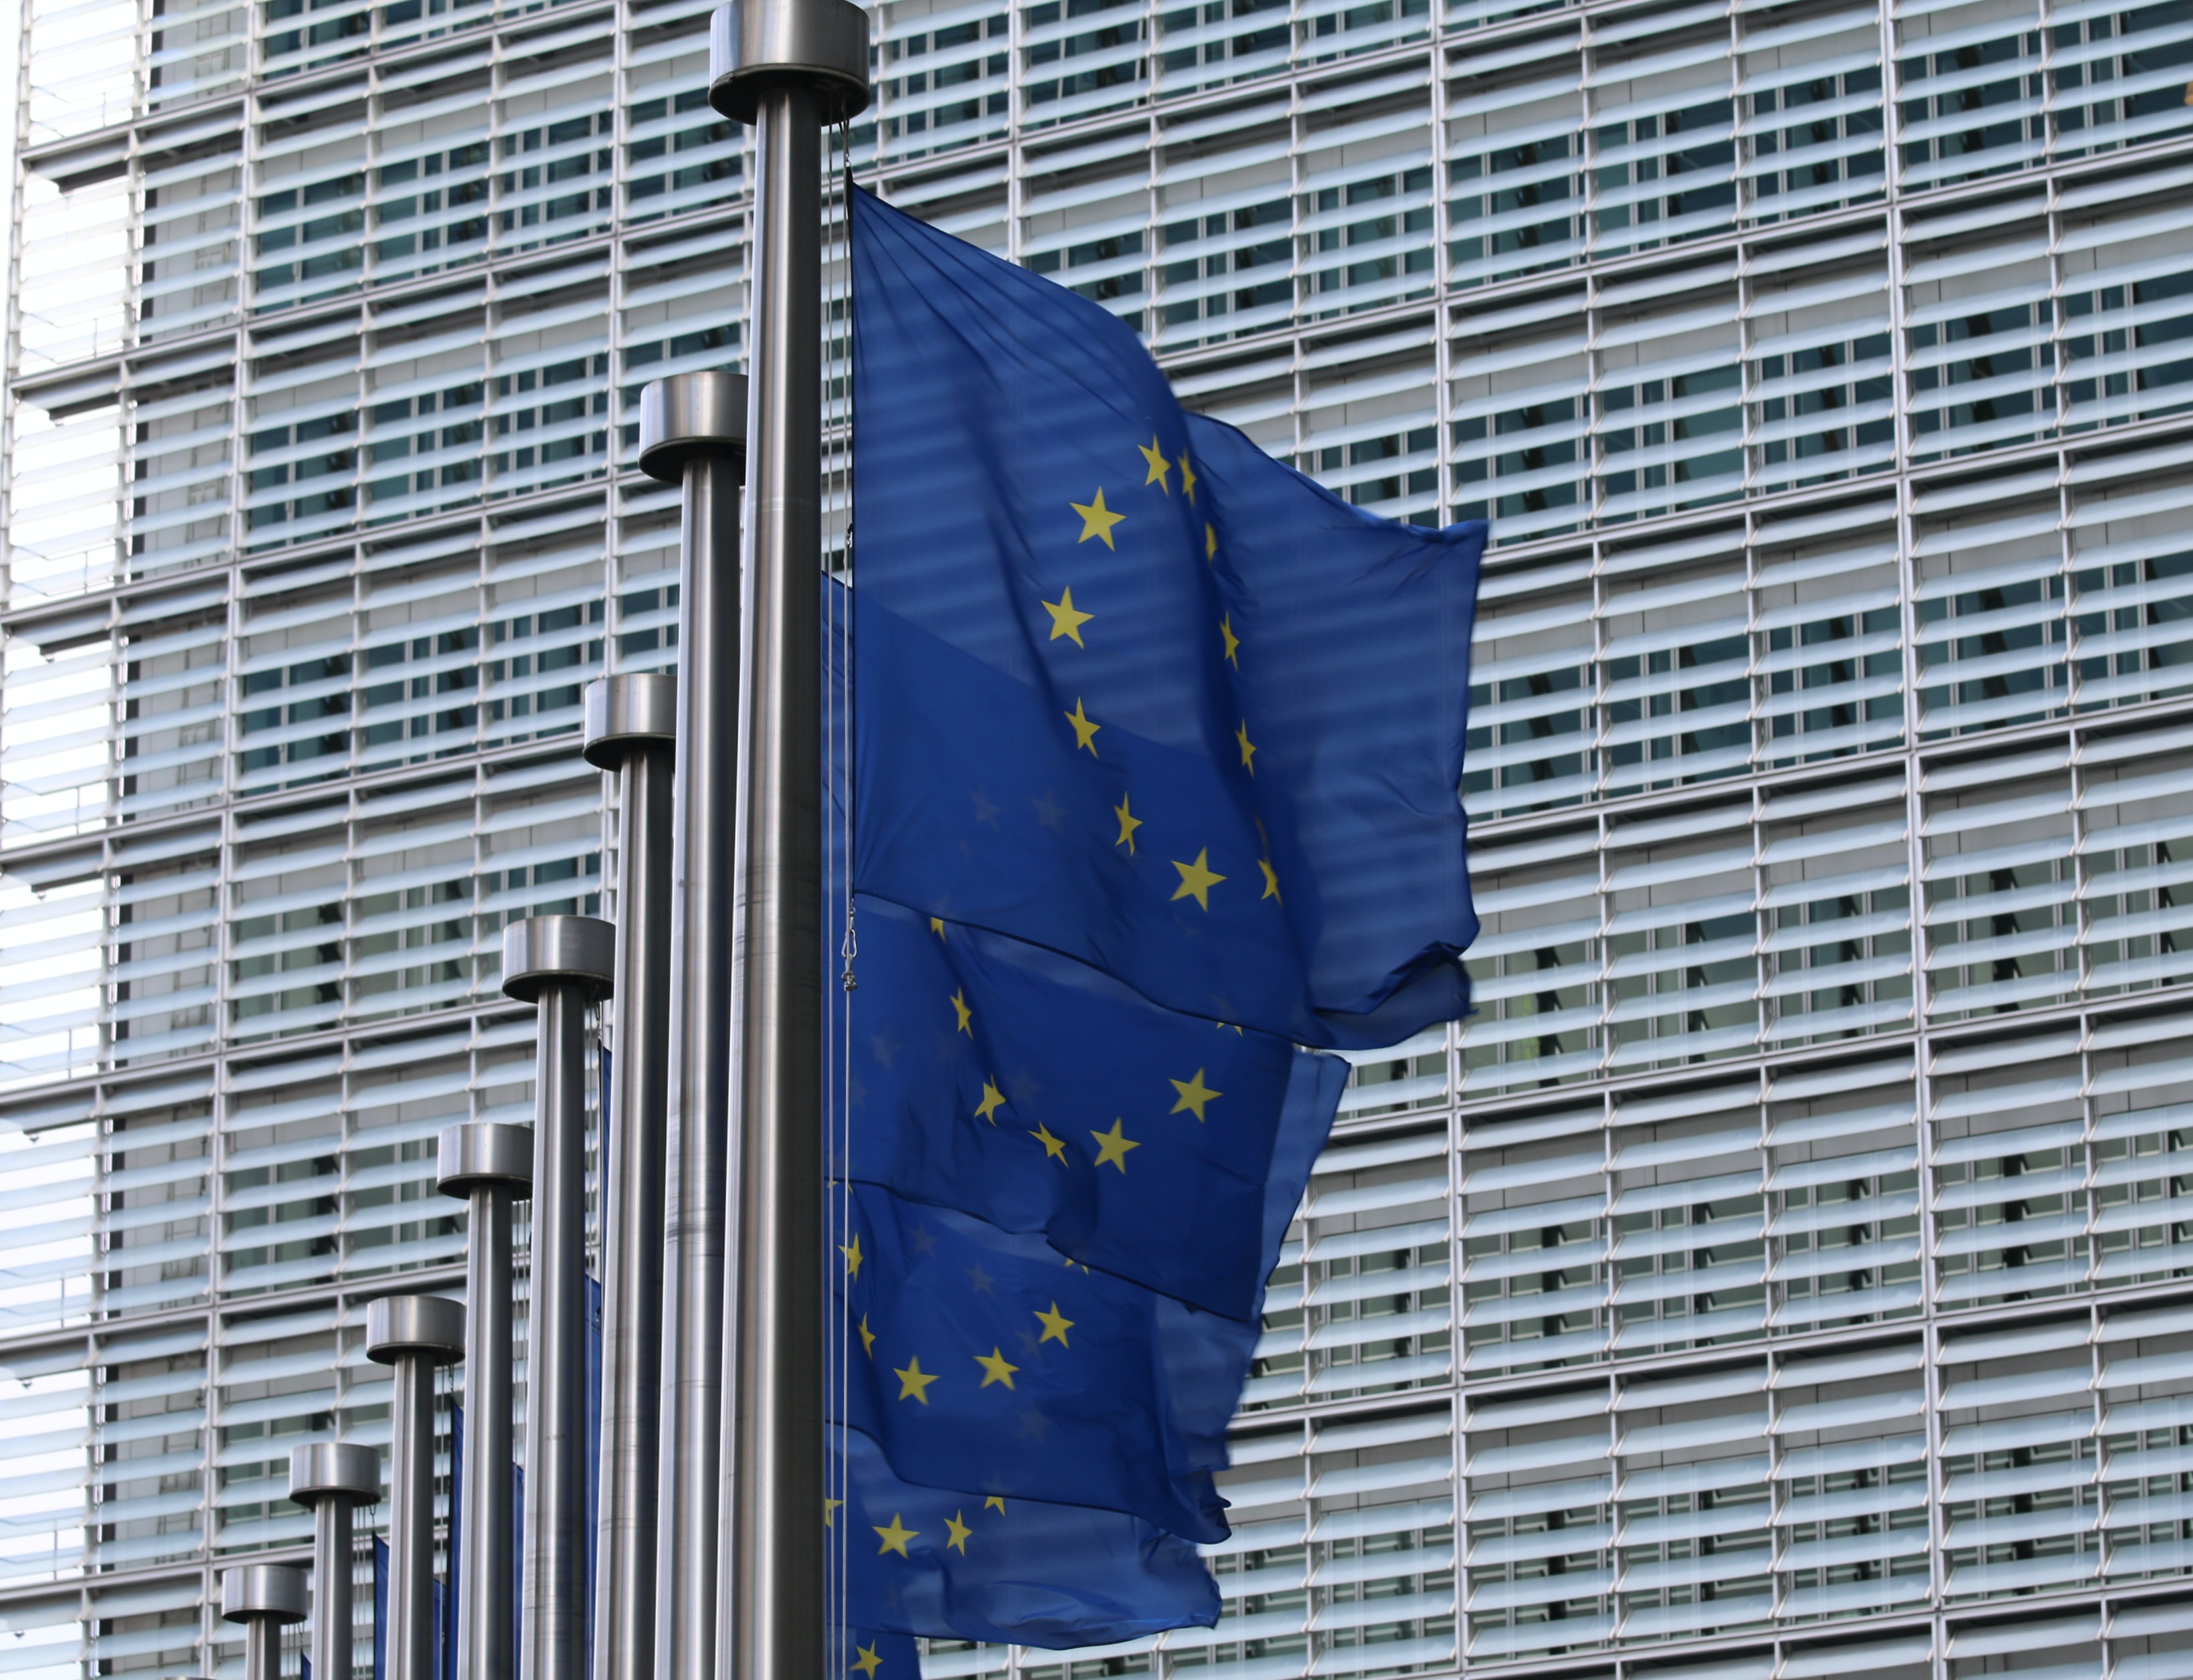 Image of the EU flags